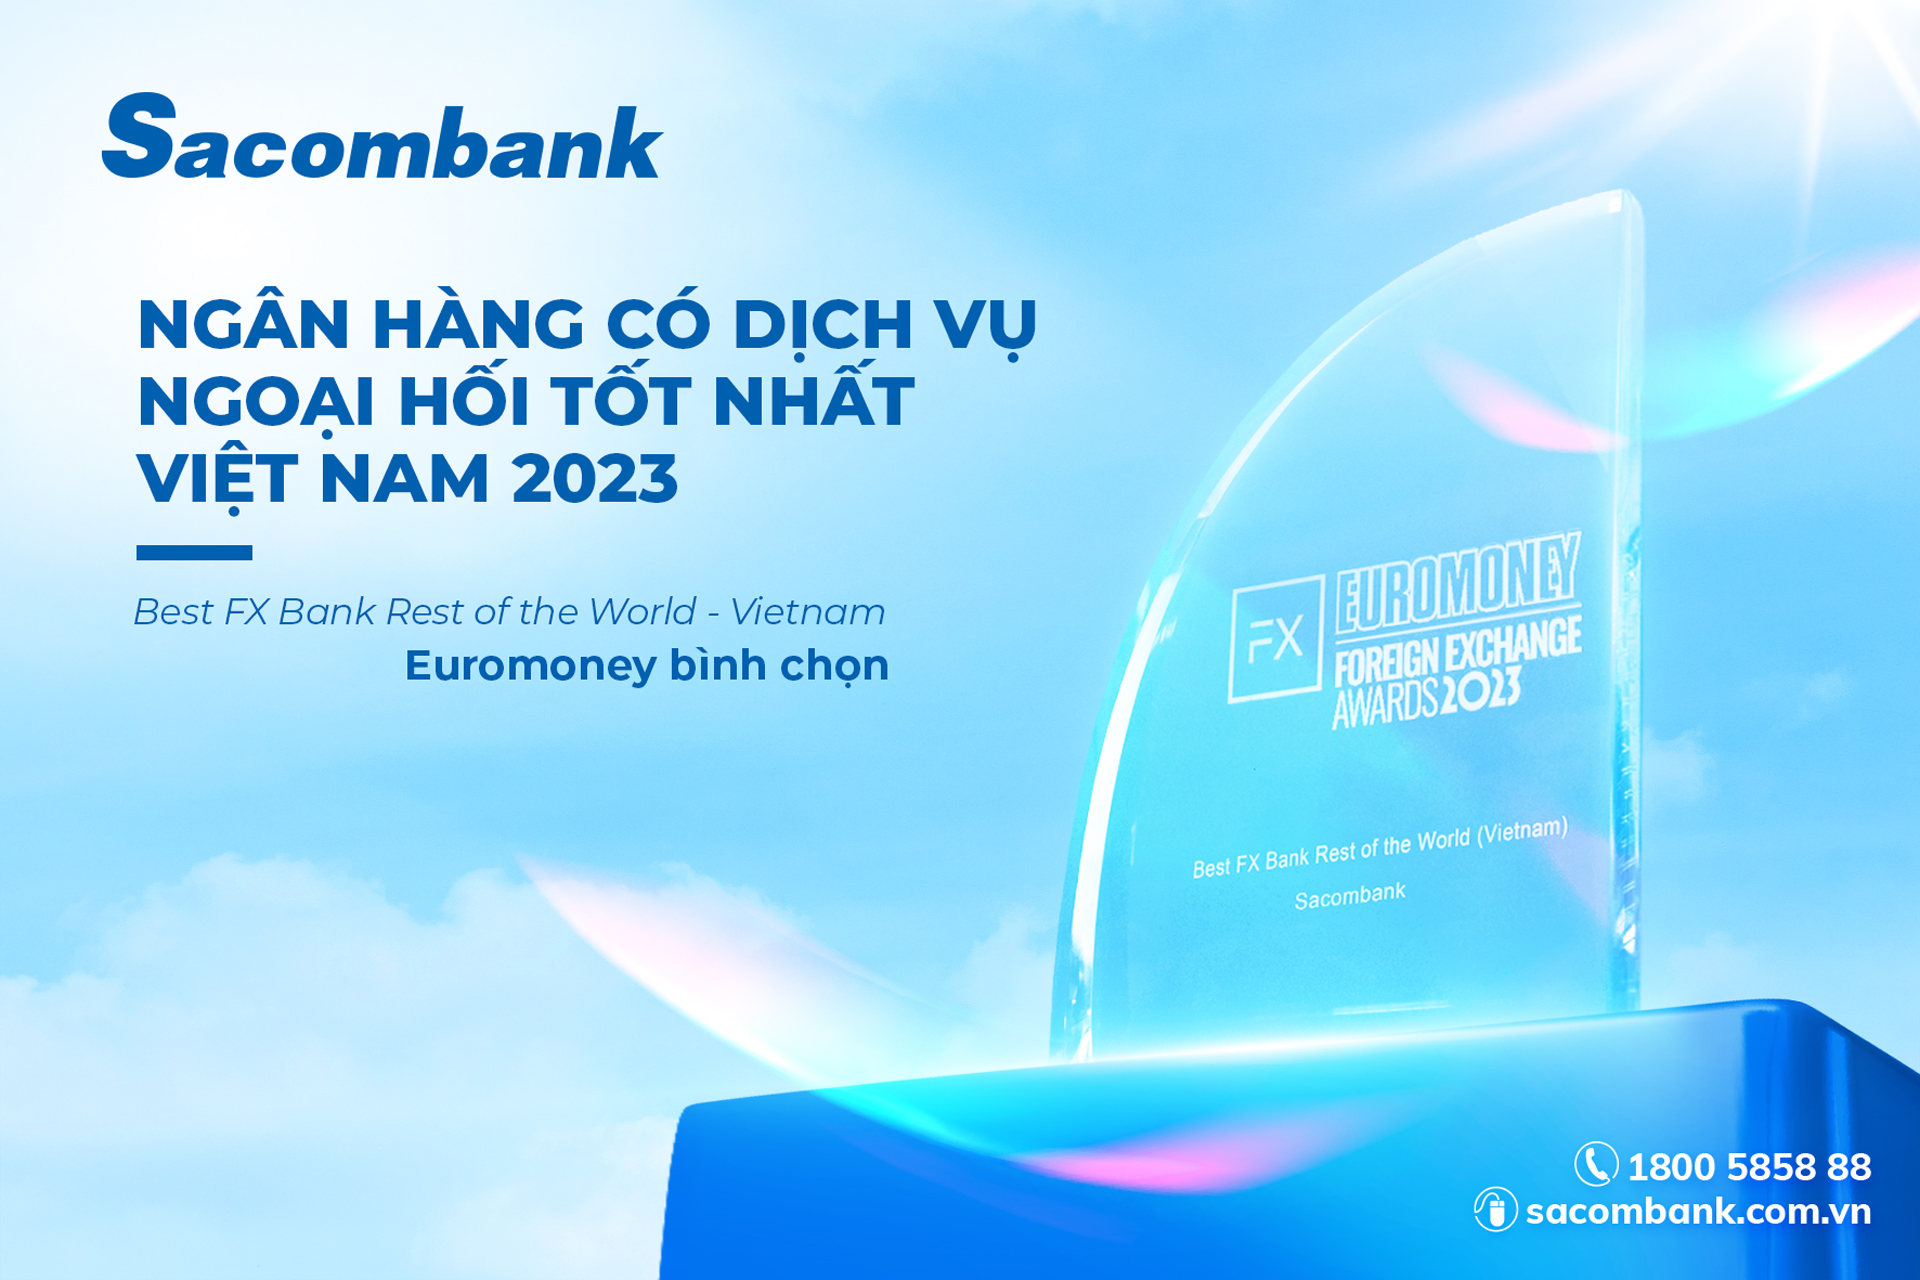 Sacombank nhận giải thưởng từ Euromoney